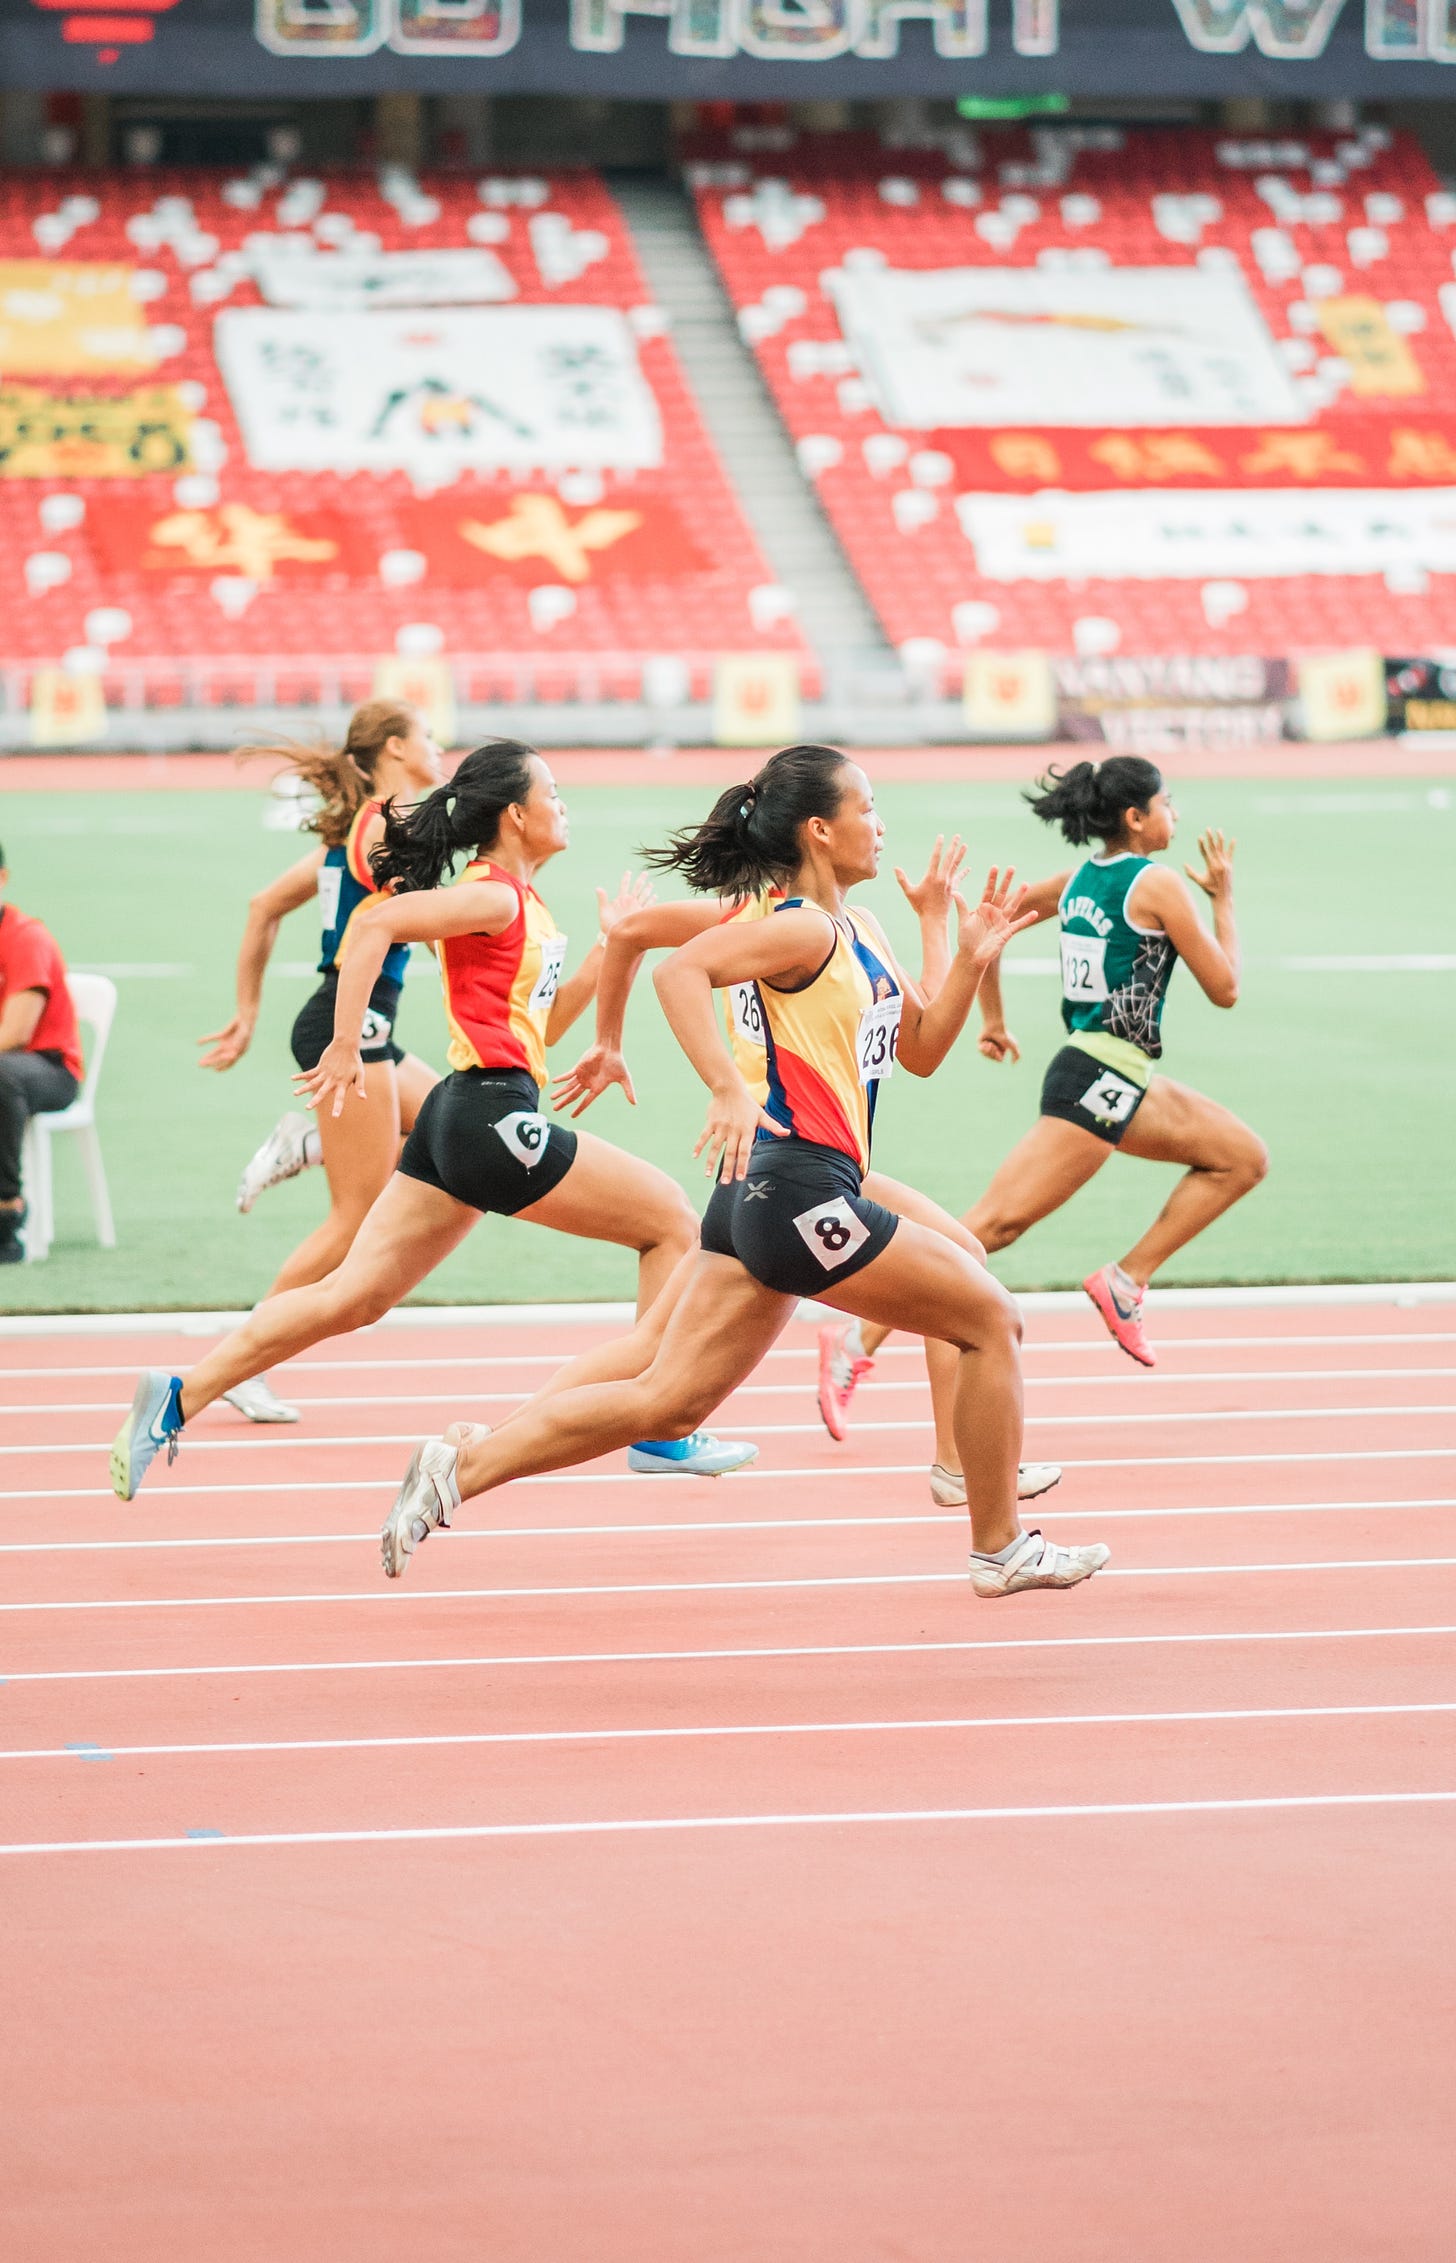 Female track athletes racing in a stadium